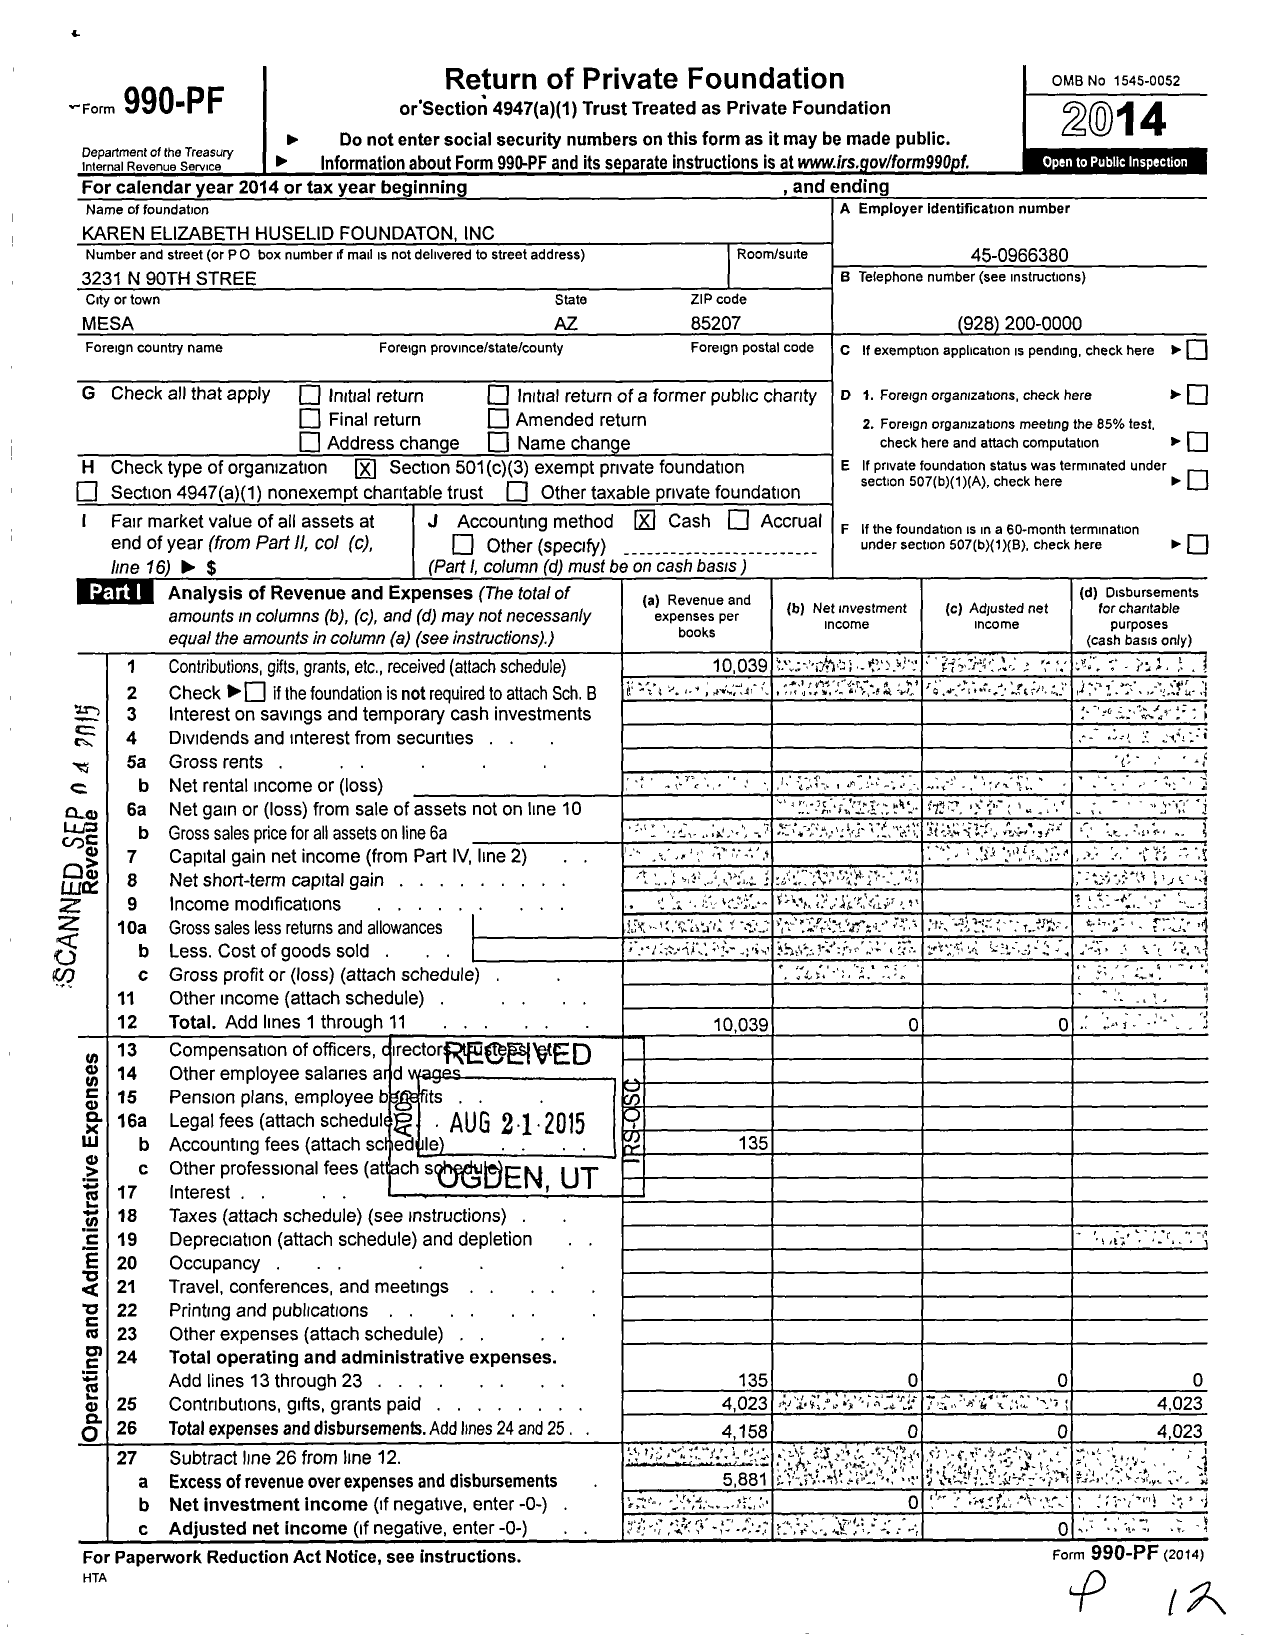 Image of first page of 2014 Form 990PF for Karen Elizabeth Huselid Foundaton